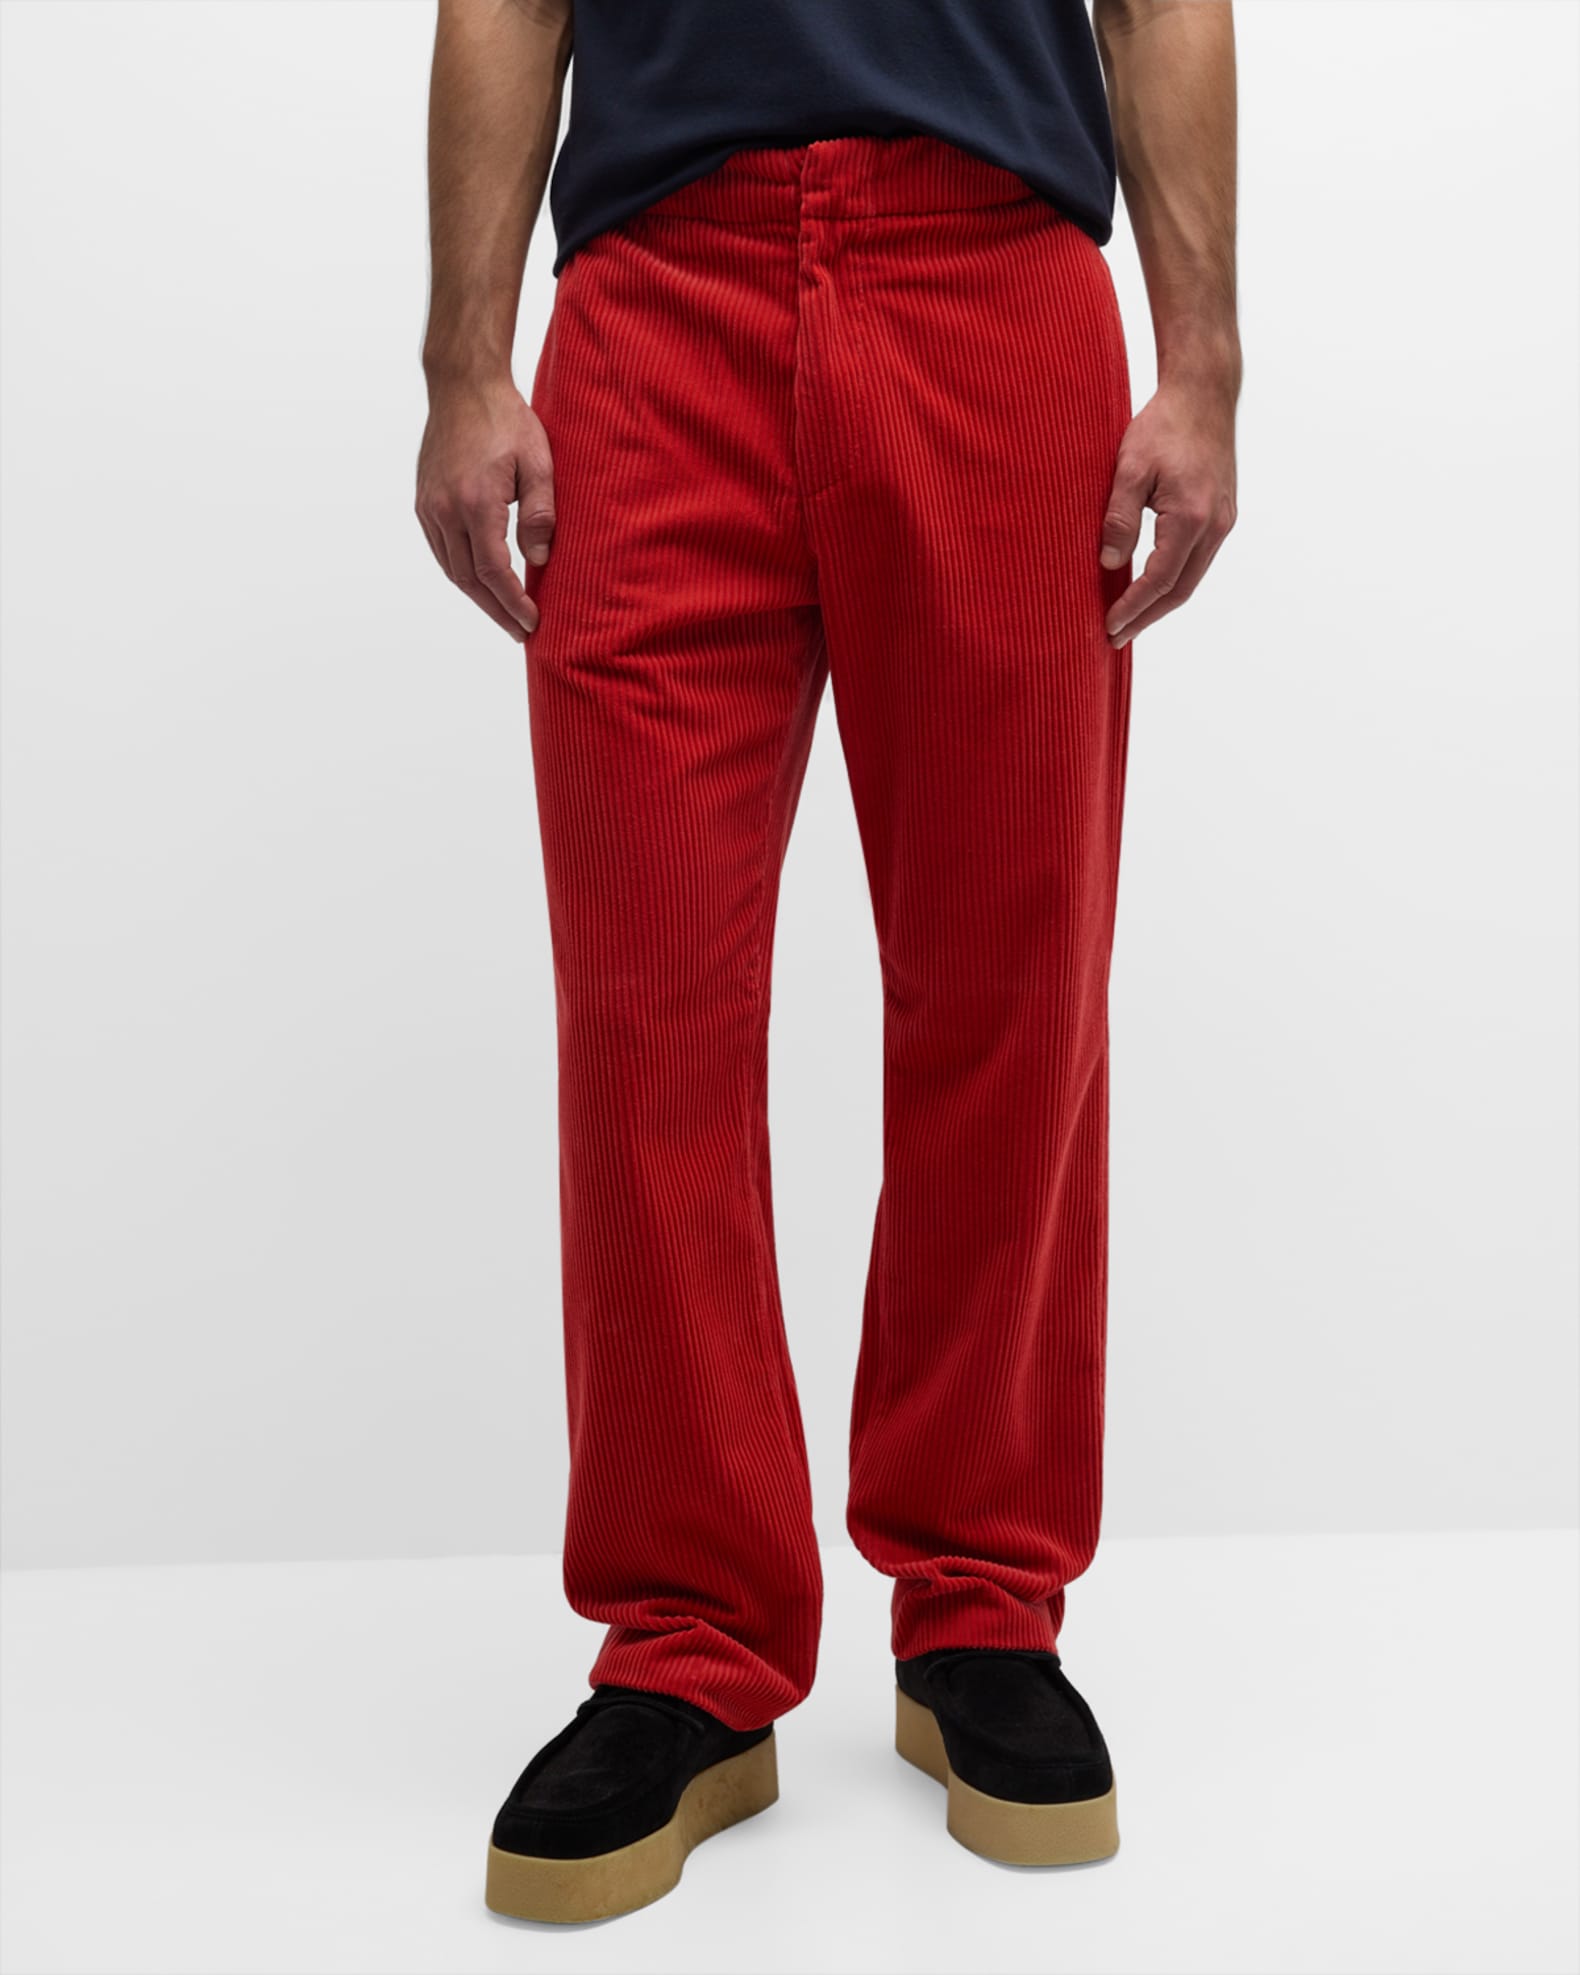 Mens Red Corduroy Pants